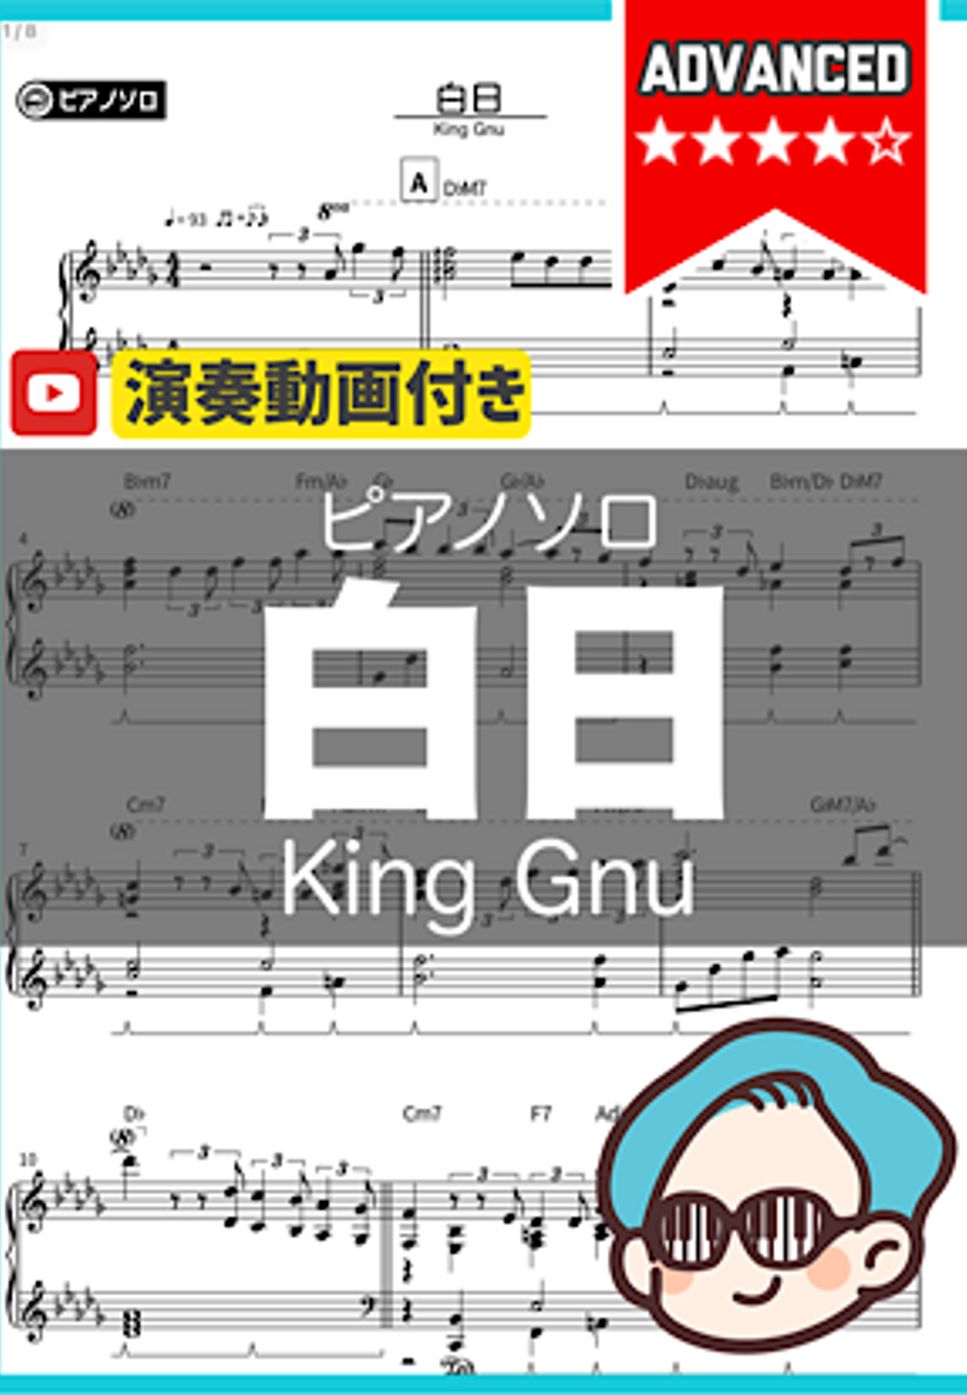 King Gnu - 白日 by THETA